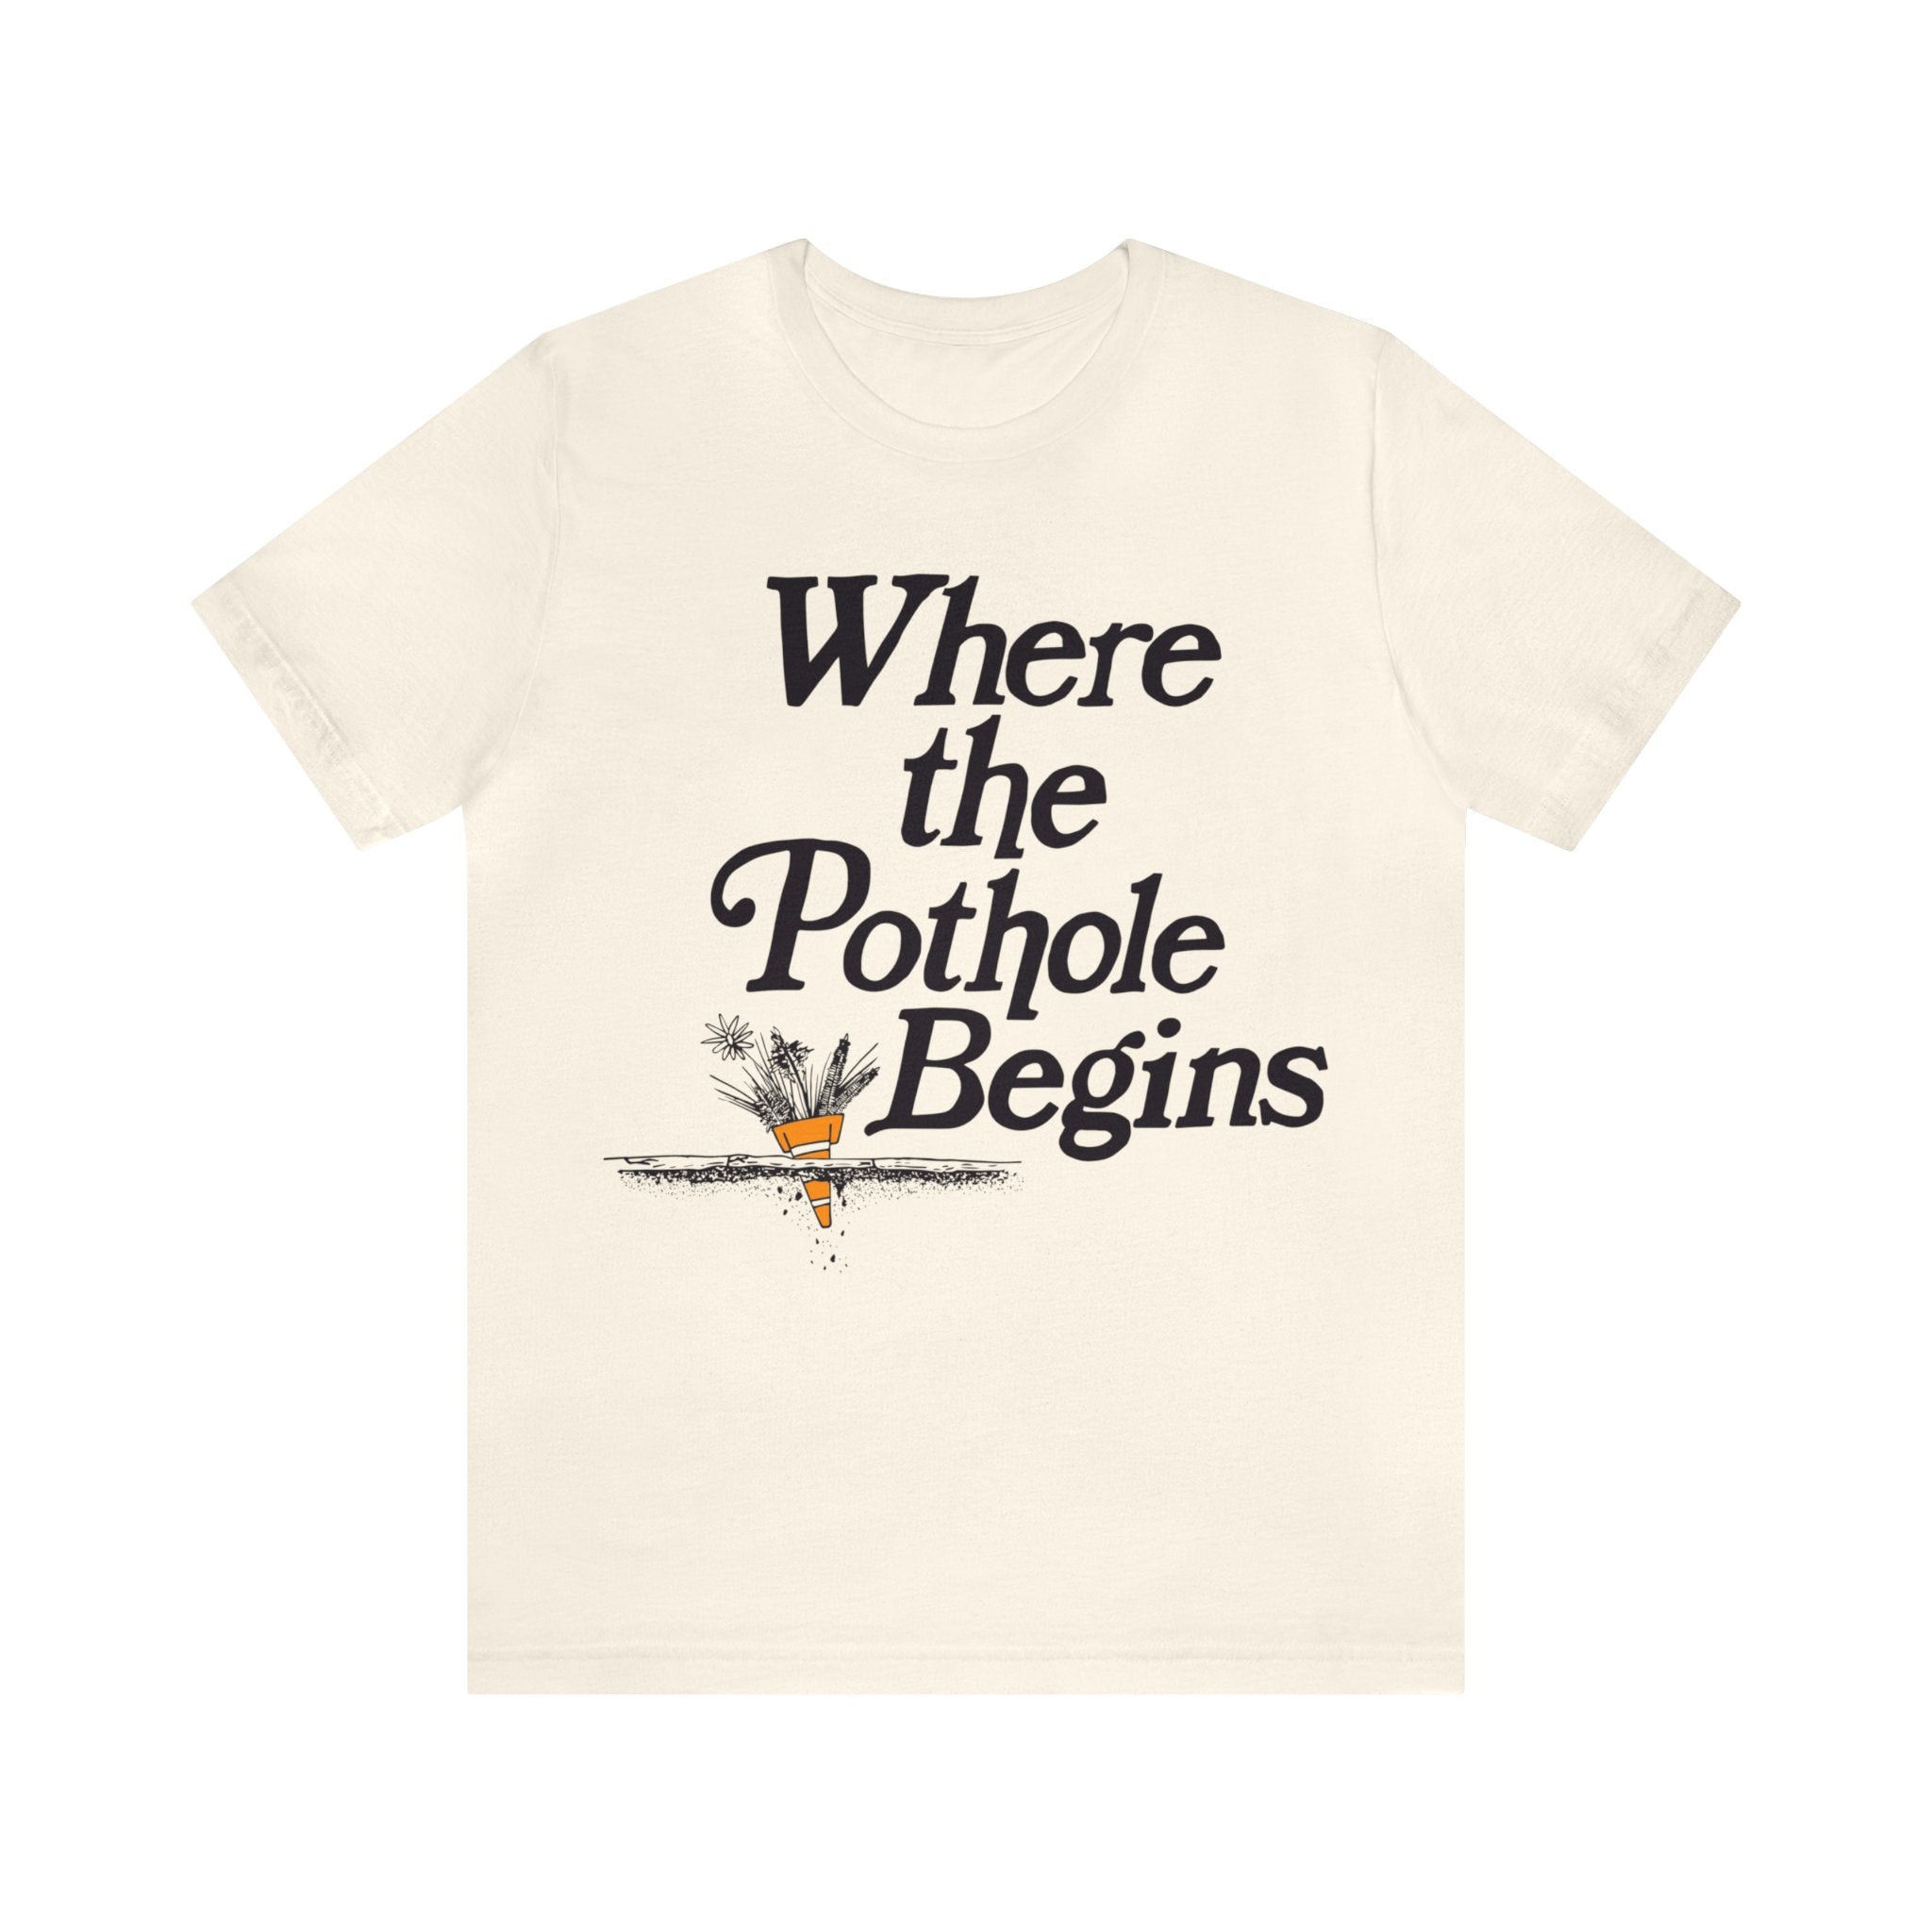 Where the Pothole Begins (2019)